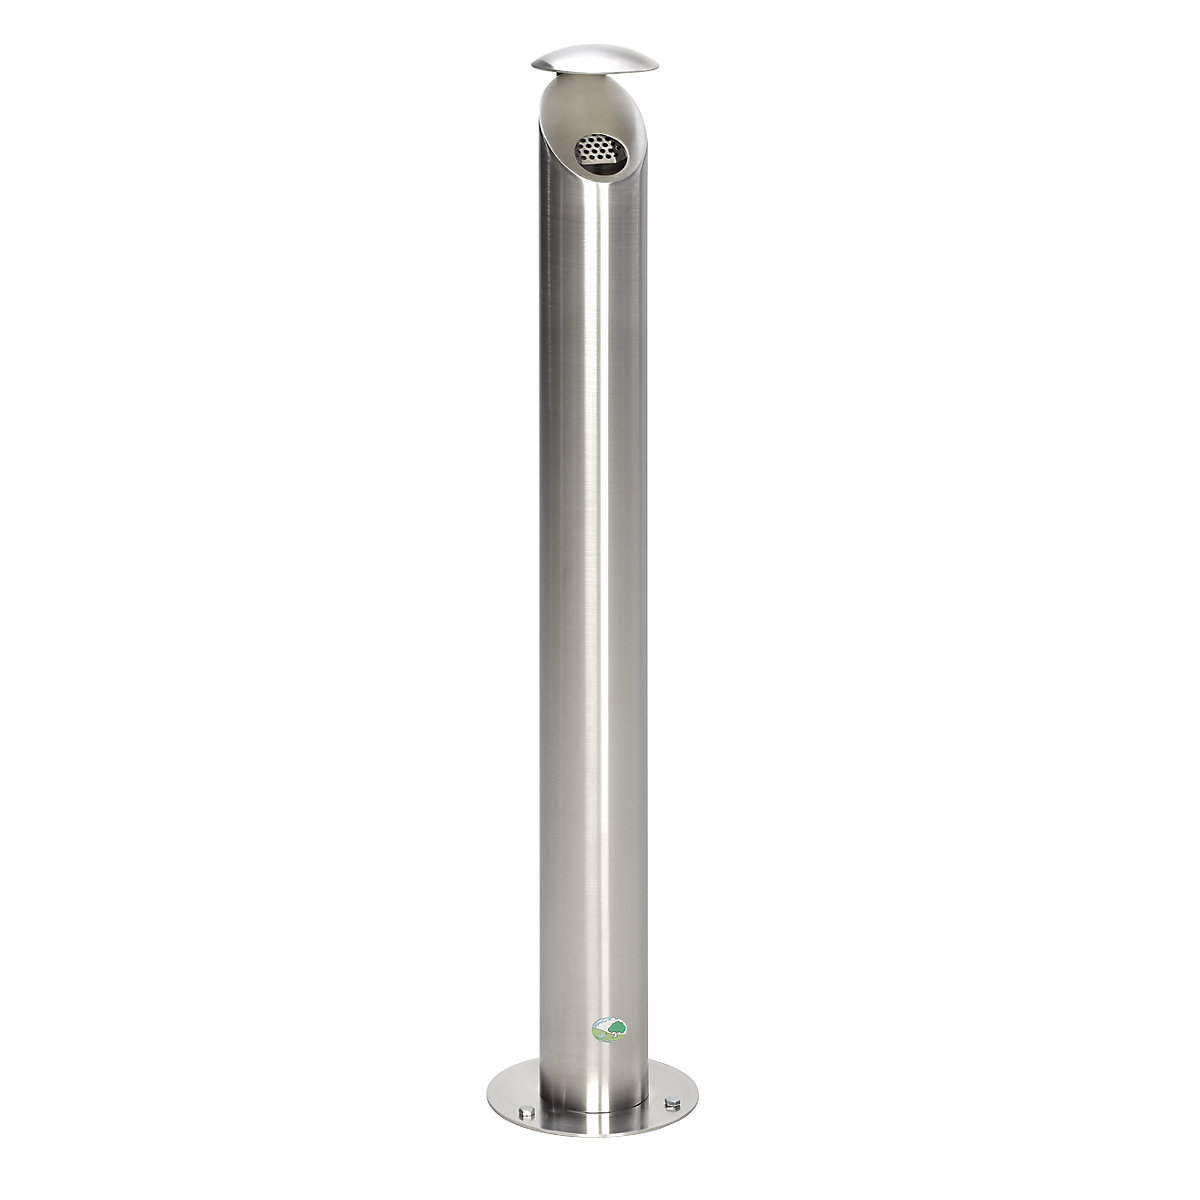 VAR – Stainless steel pedestal ashtray, lockable, height 1030 mm, Ø 120 mm, brushed